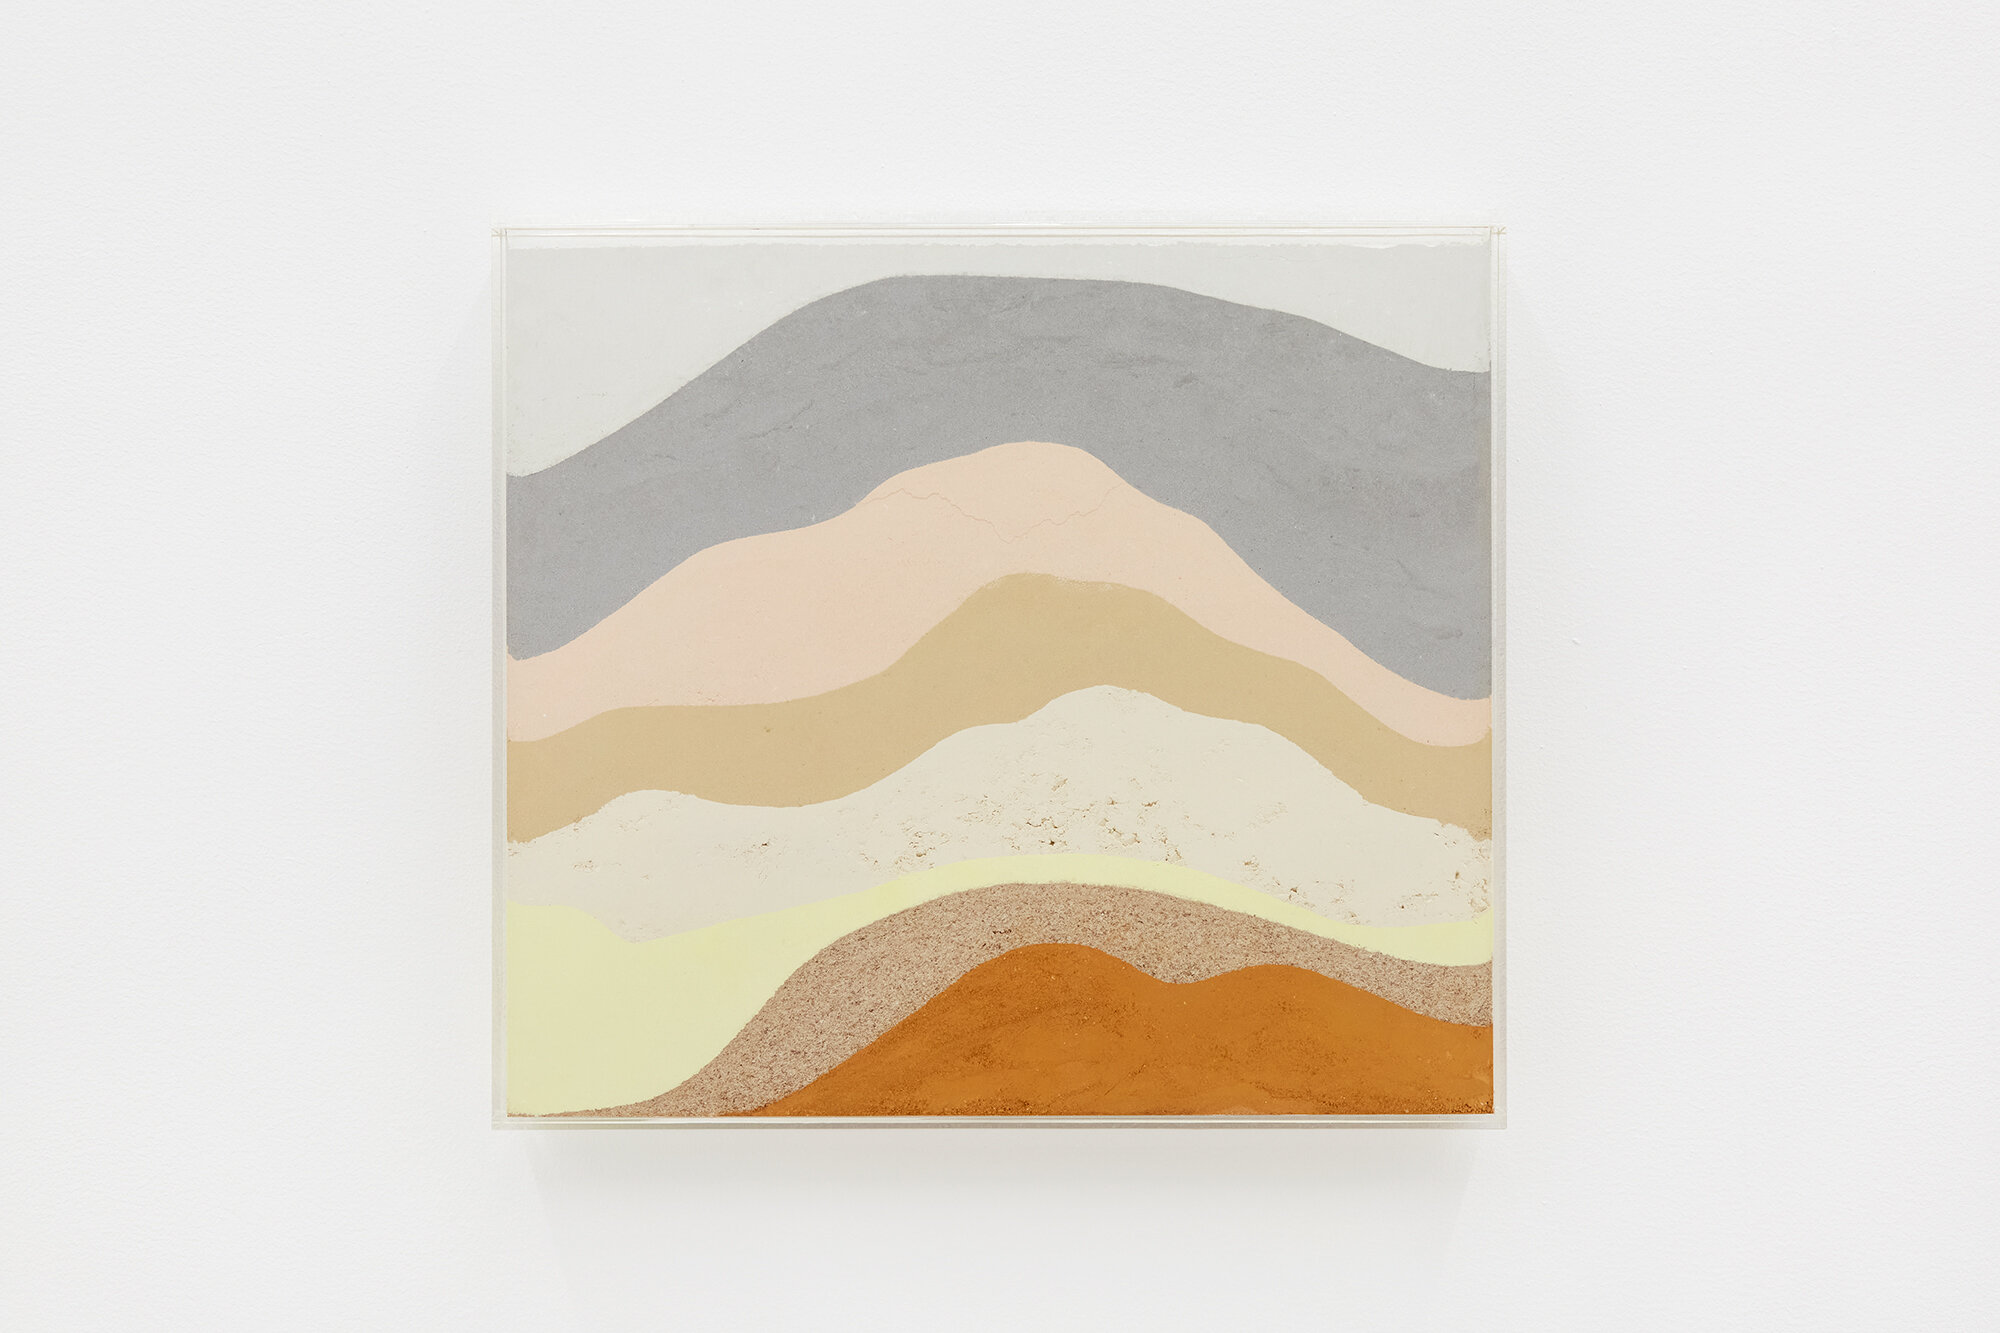  Simon Linington,  Souvenir , 2020. Acrylic, chalk, clay, pigment and plaster in acrylic display case, 32 x 26.5 x 1.5 cm  